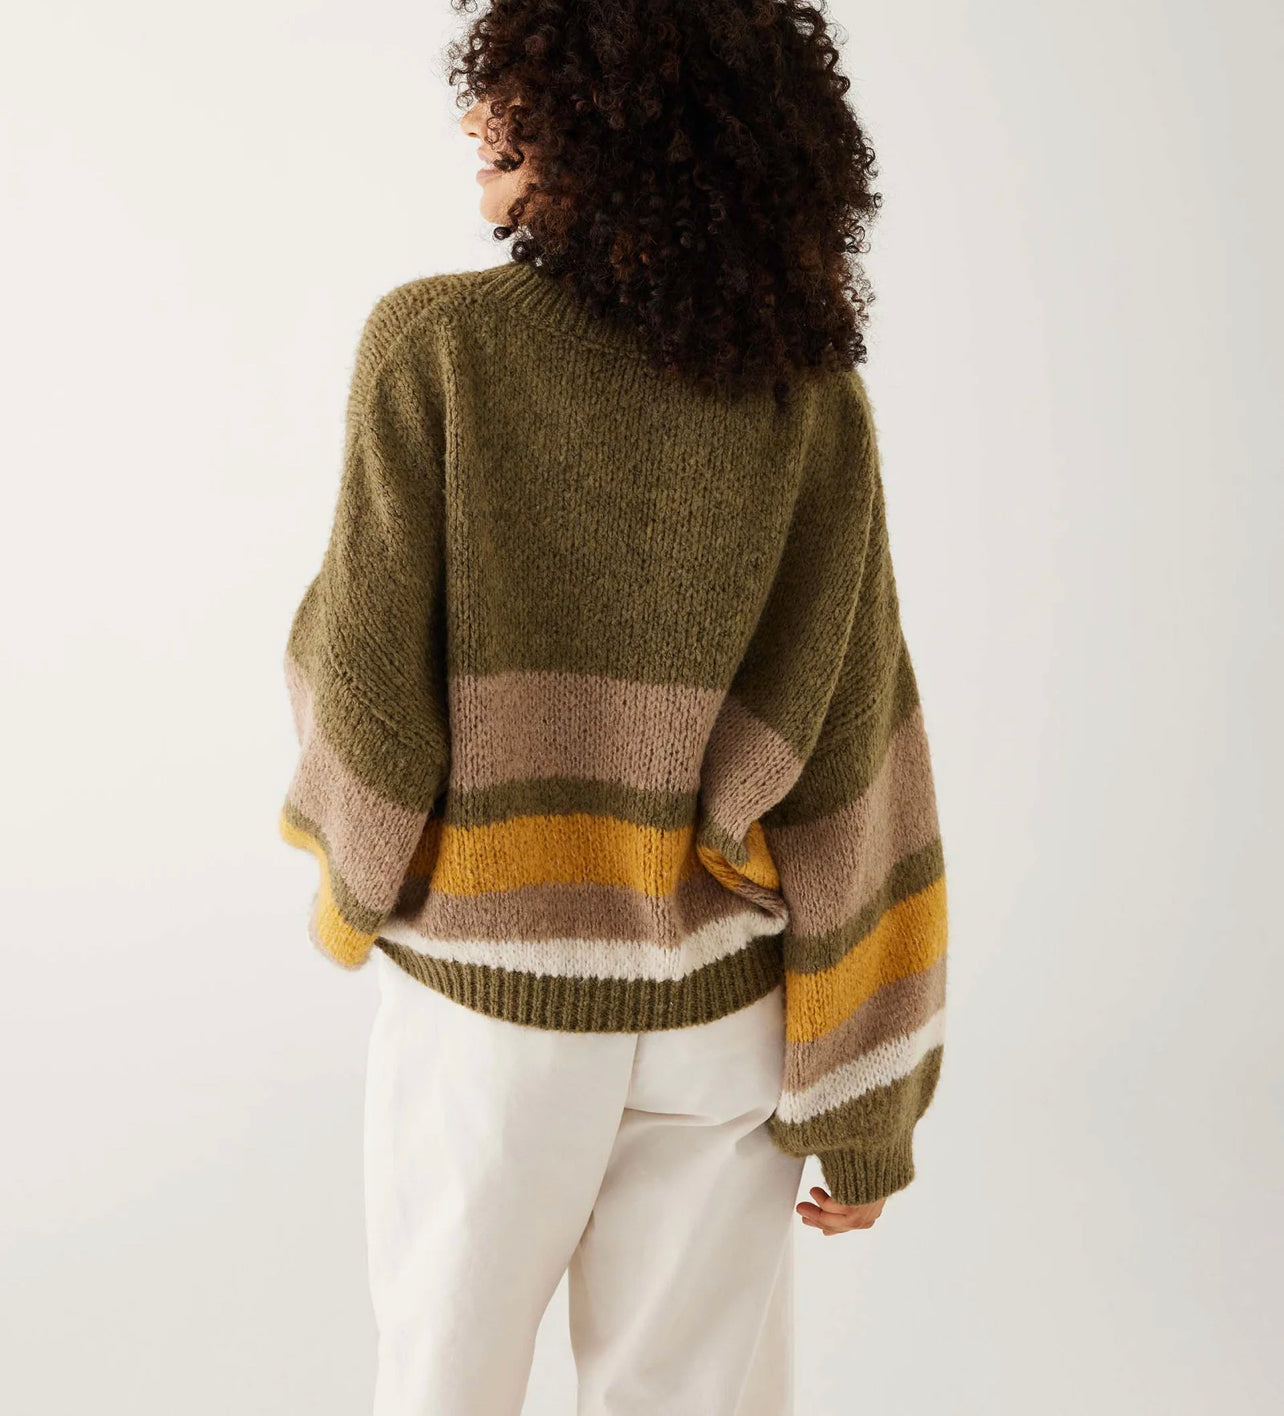 Mersea Pisa Striped Sweater